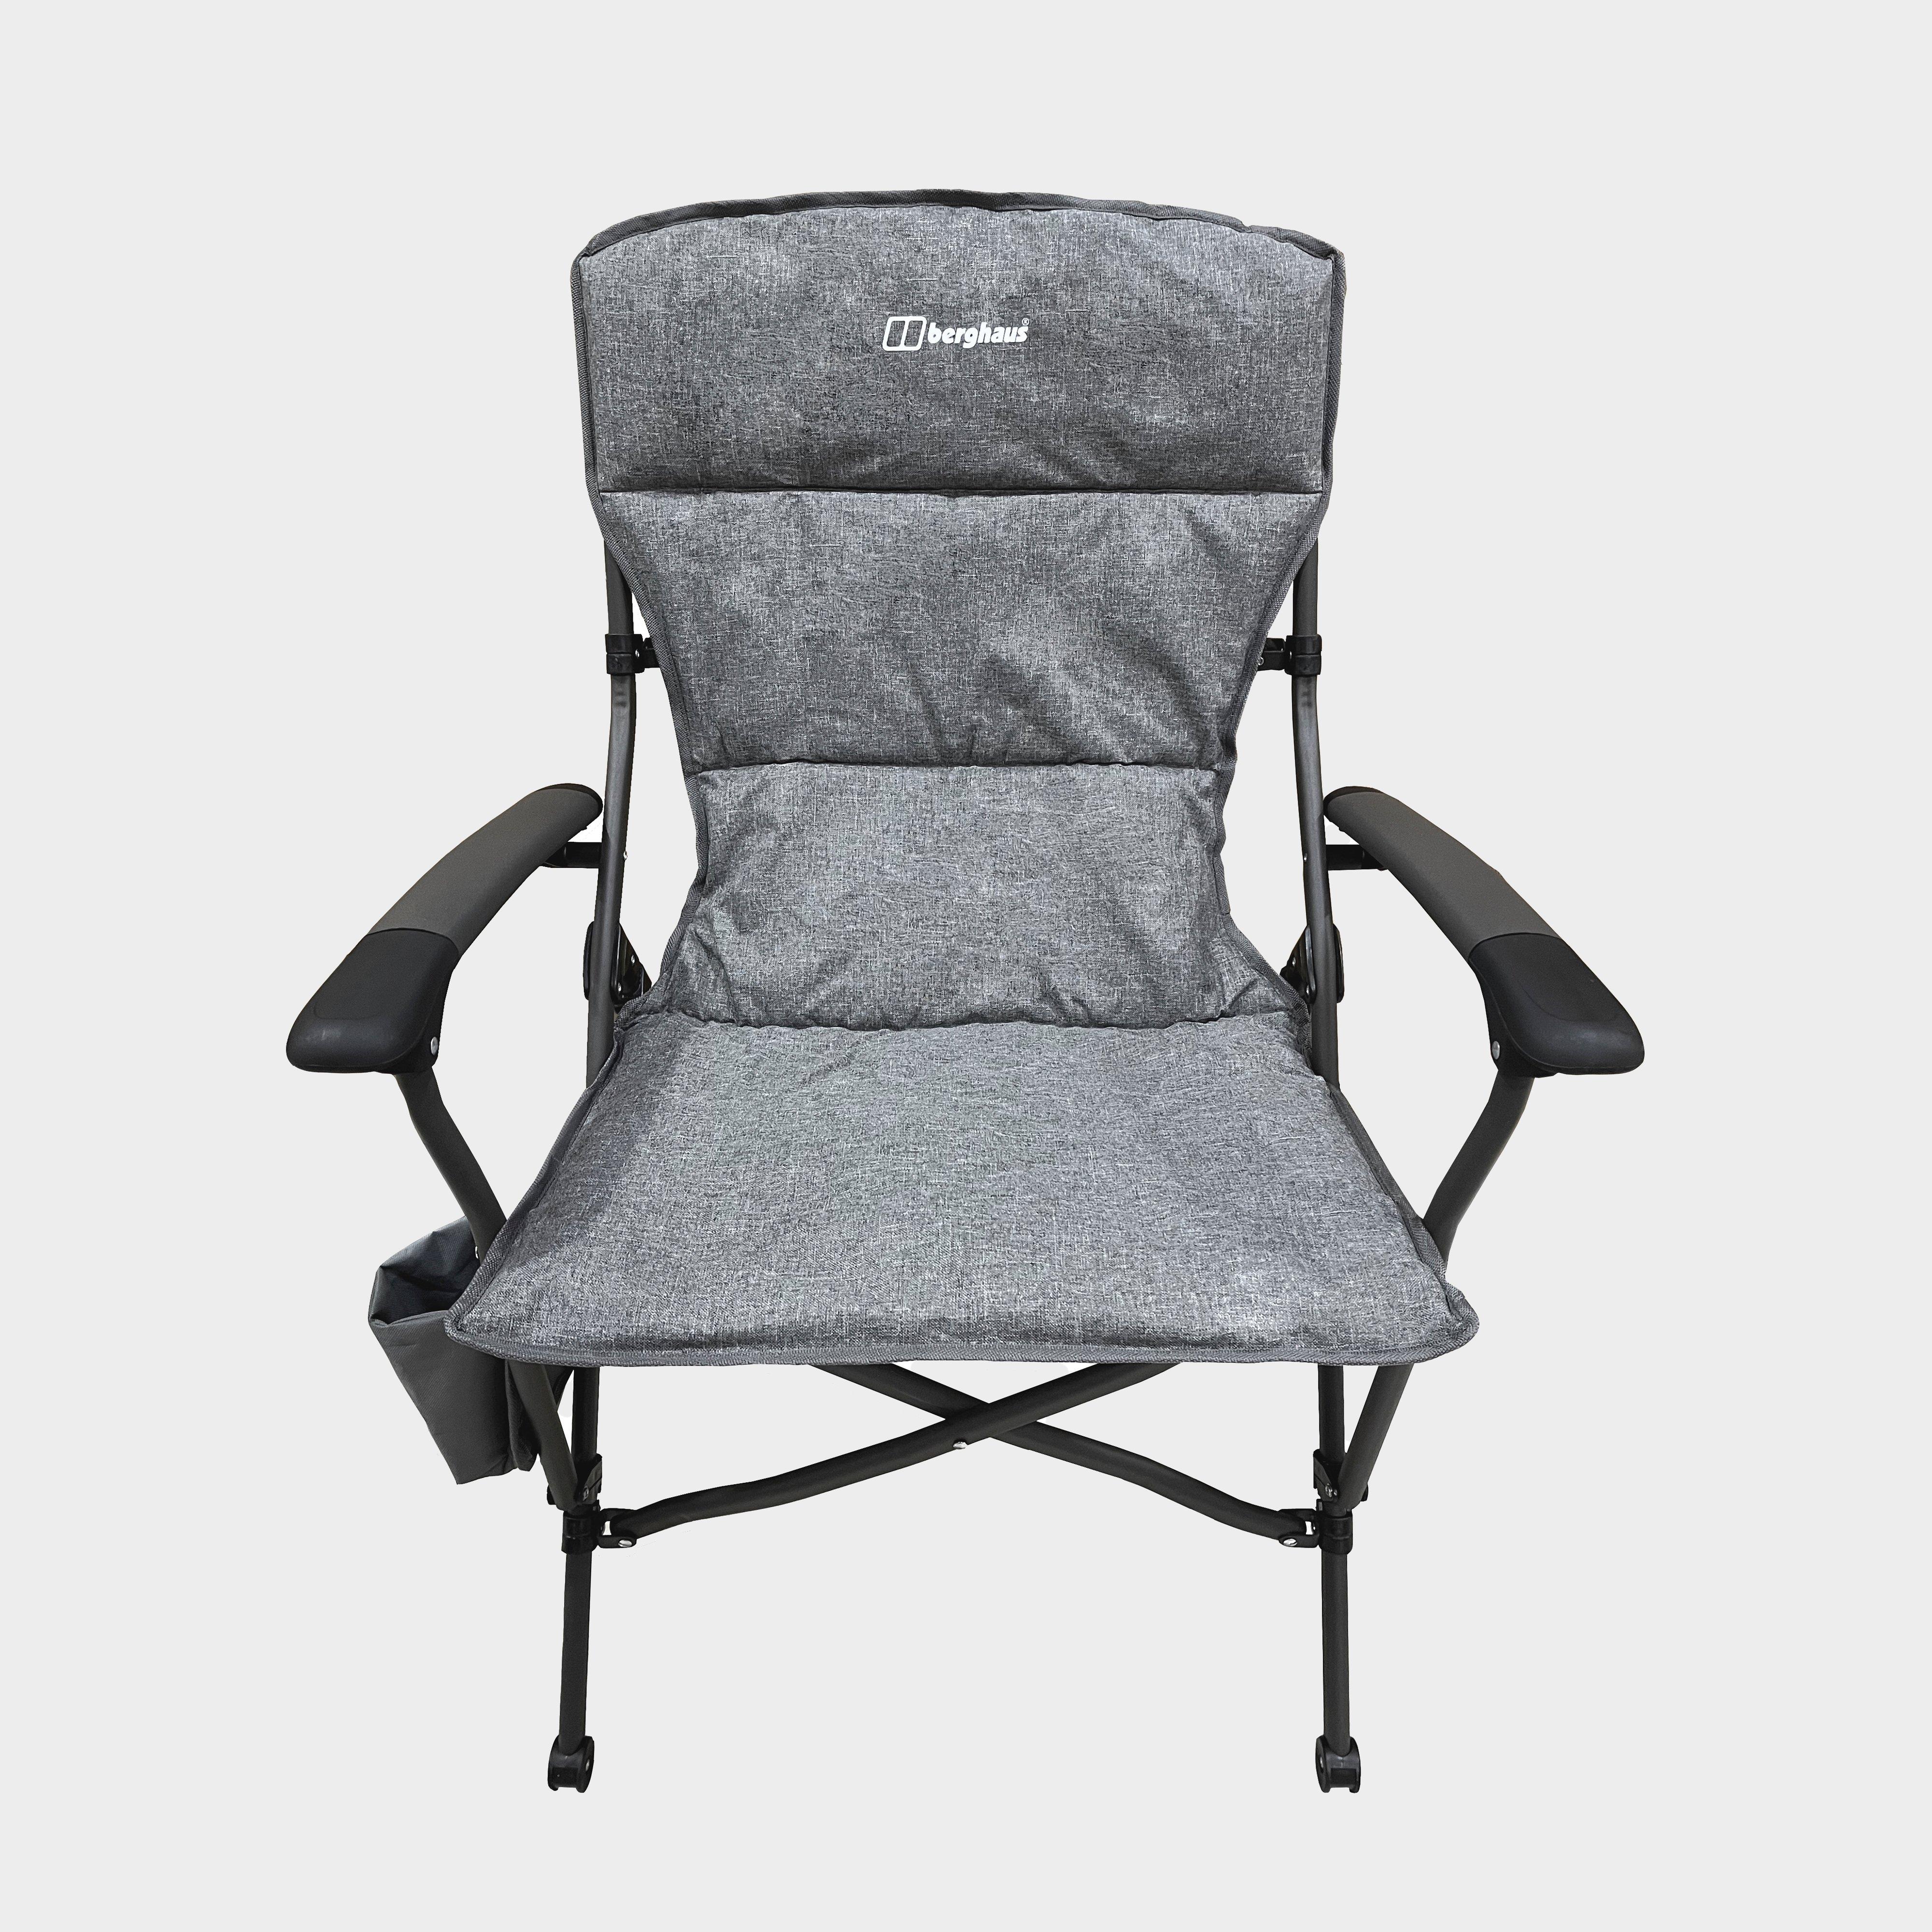 Berghaus Berghaus Freeform Highback Chair - Grey, Grey